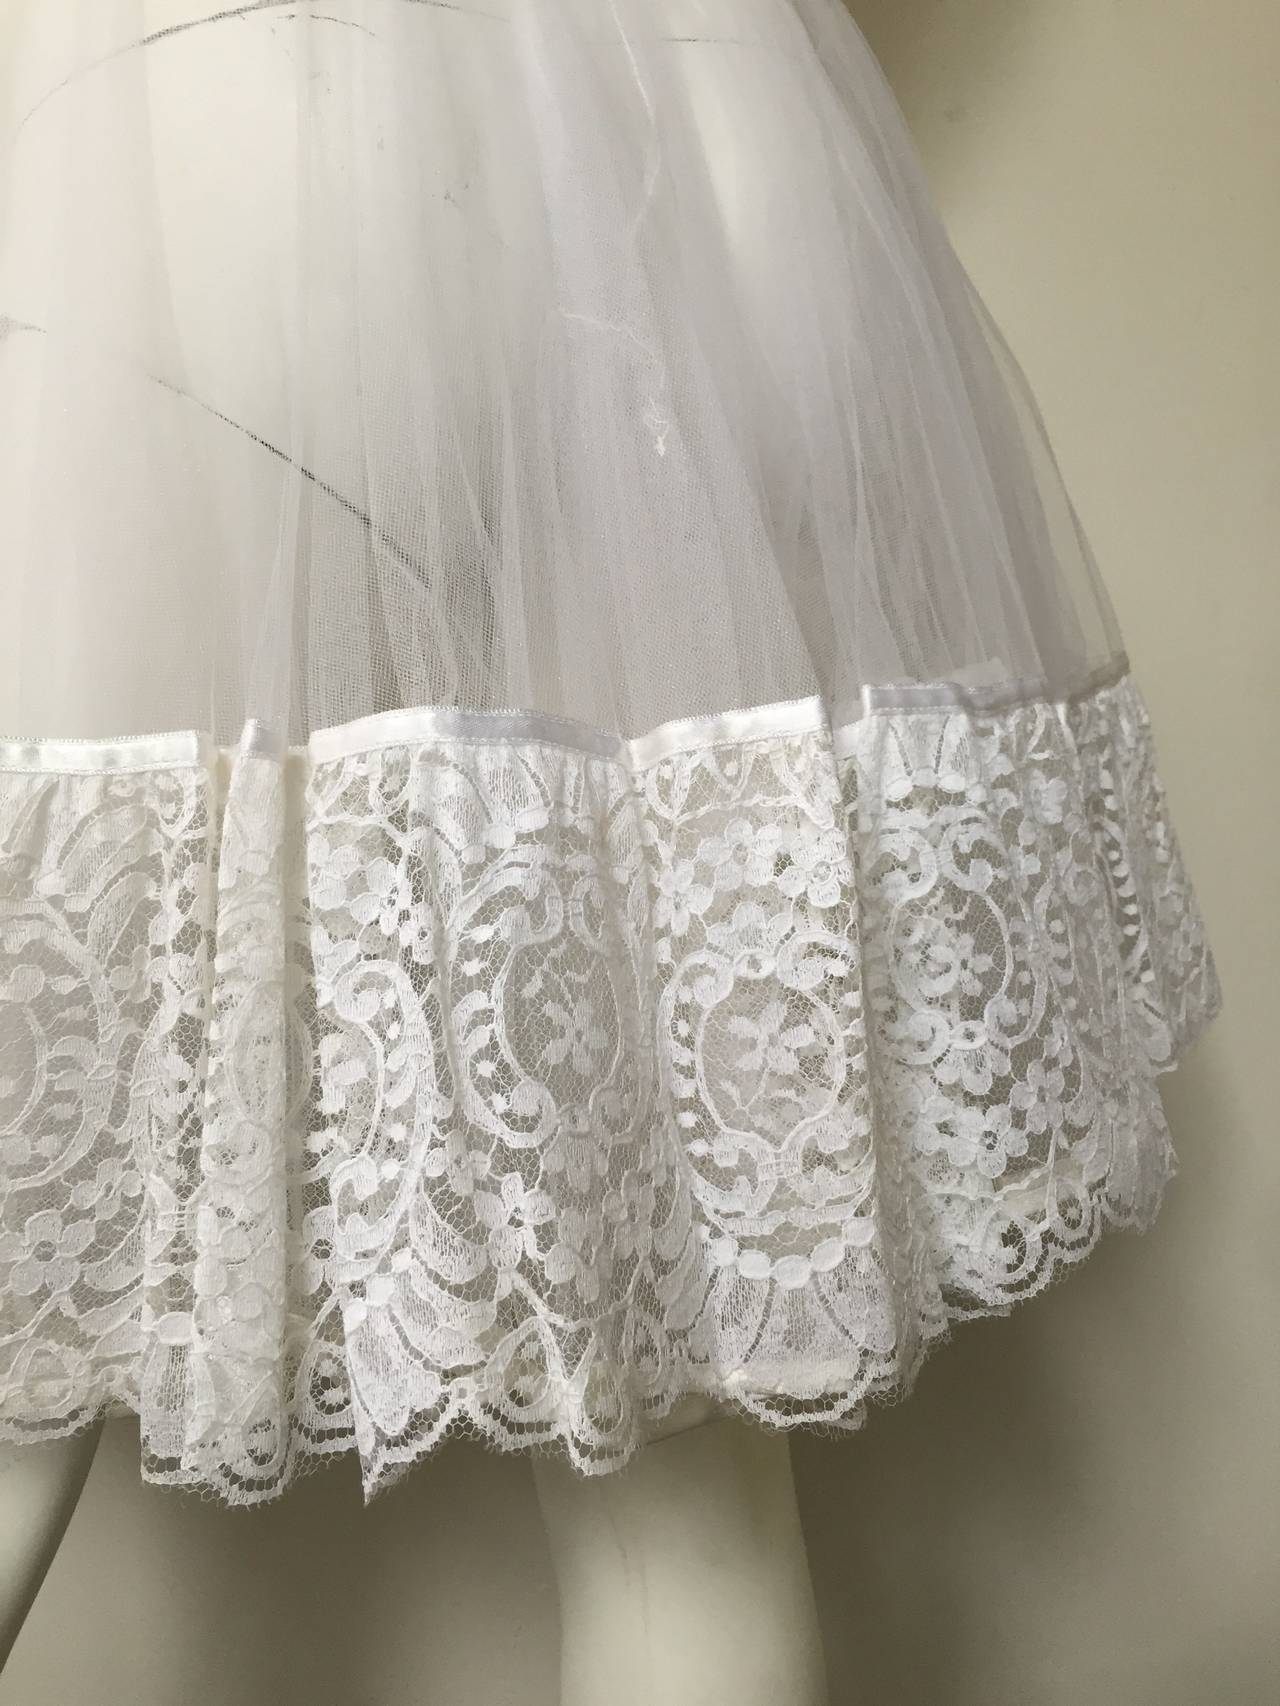 Emanuel Ungaro Parallele Paris 80s Petticoat Size 4. For Sale at 1stdibs